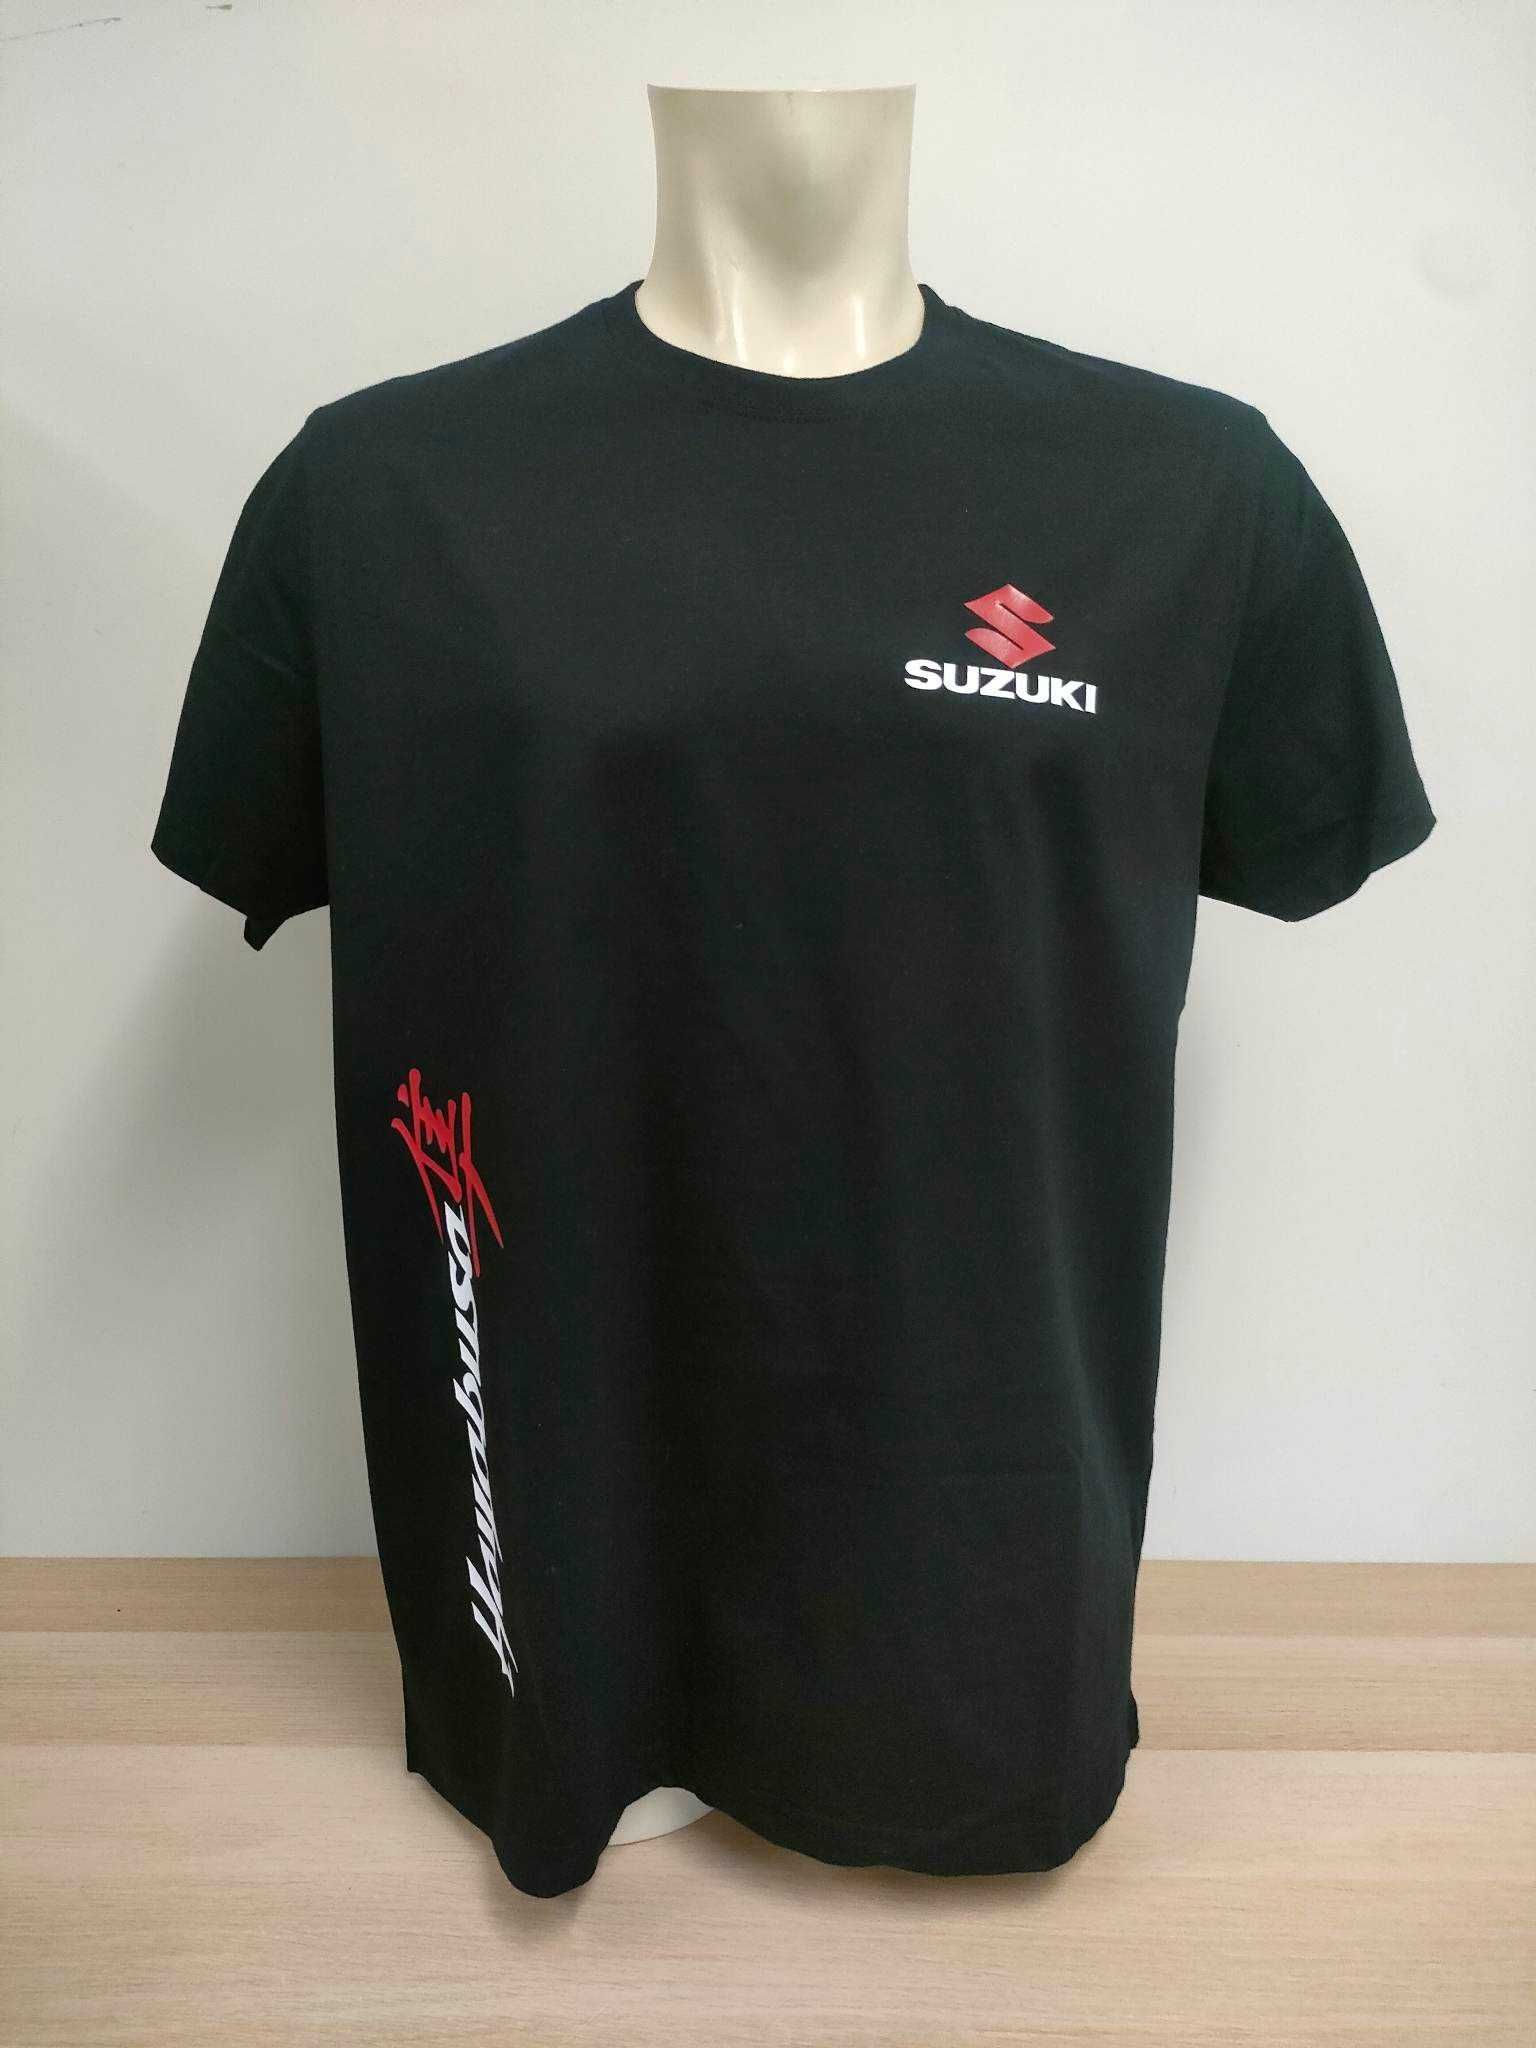 Suzuki Hayabusa - t-shirt personalizada